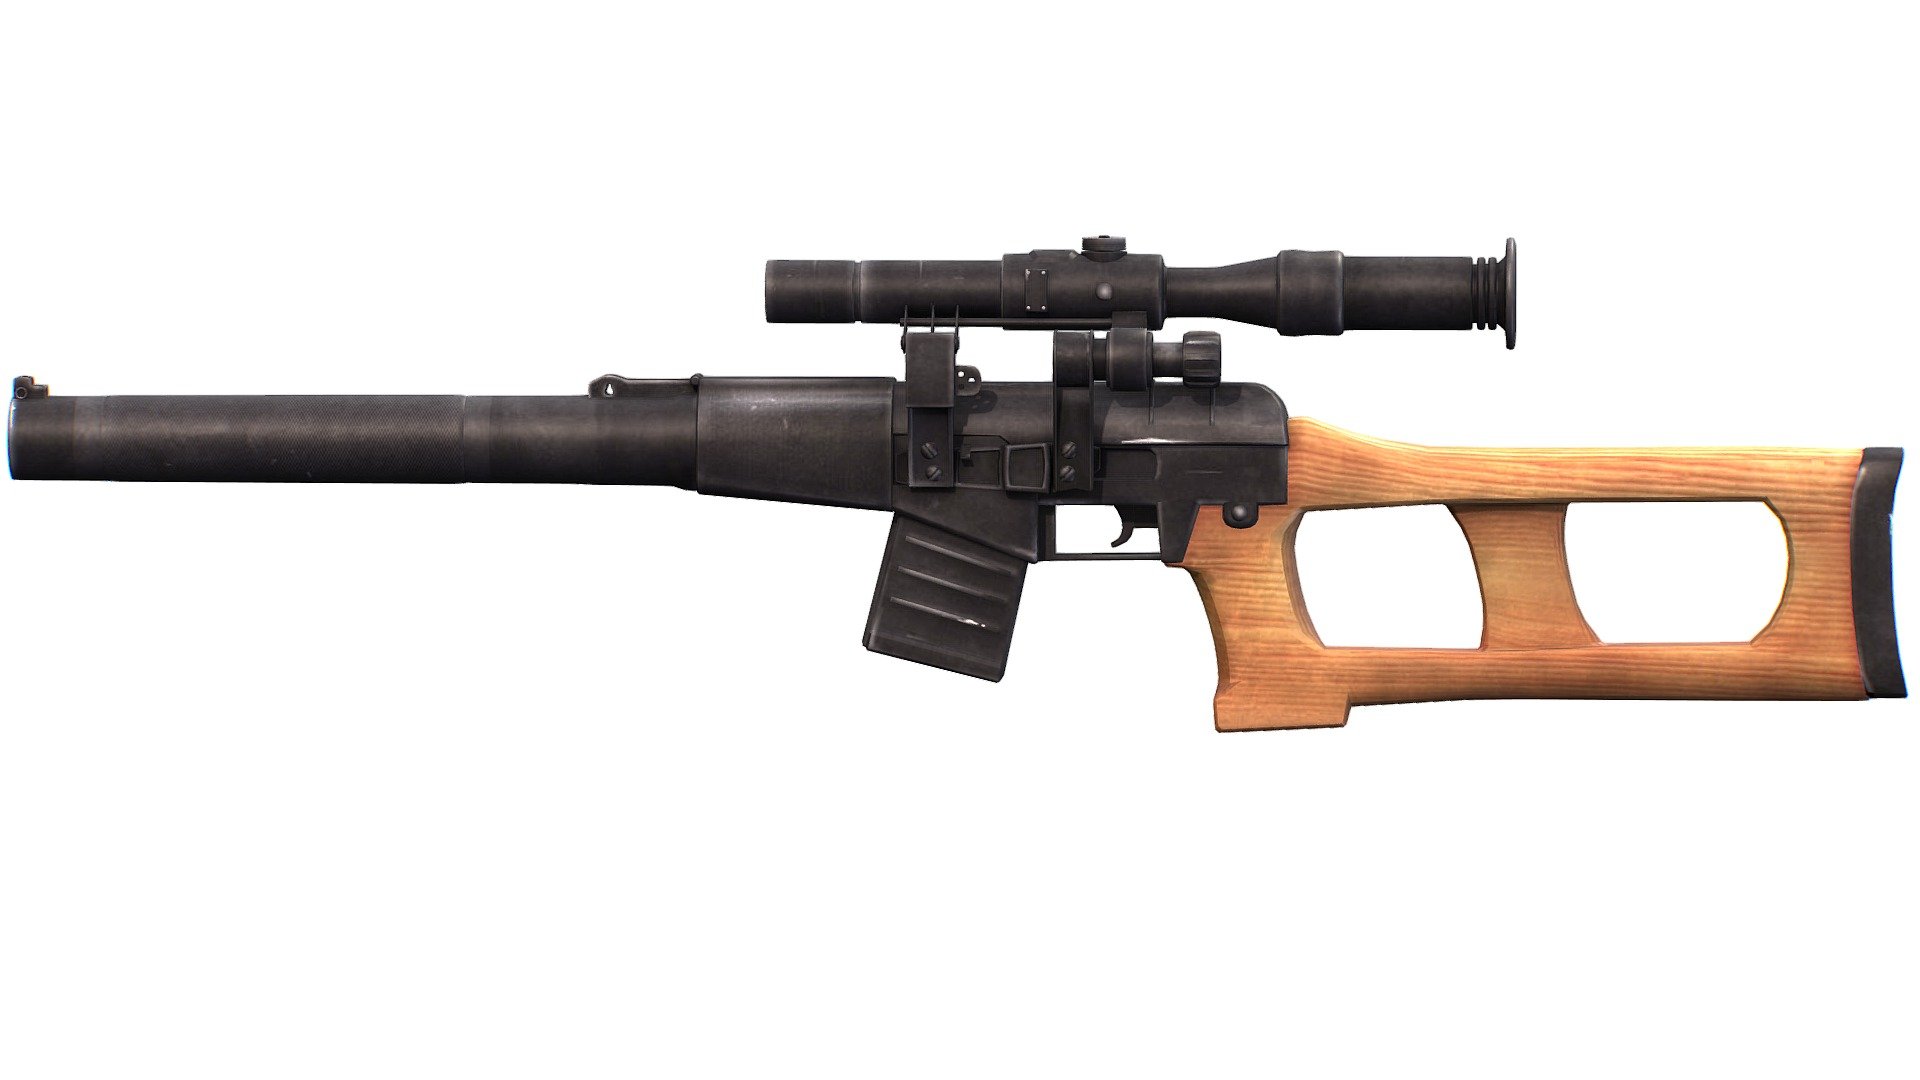 Silent Sniper Rifle Vintorez GRAU - 6P29 LowPoly model -1024x1024 textures, 3dsMaya file included 3d model